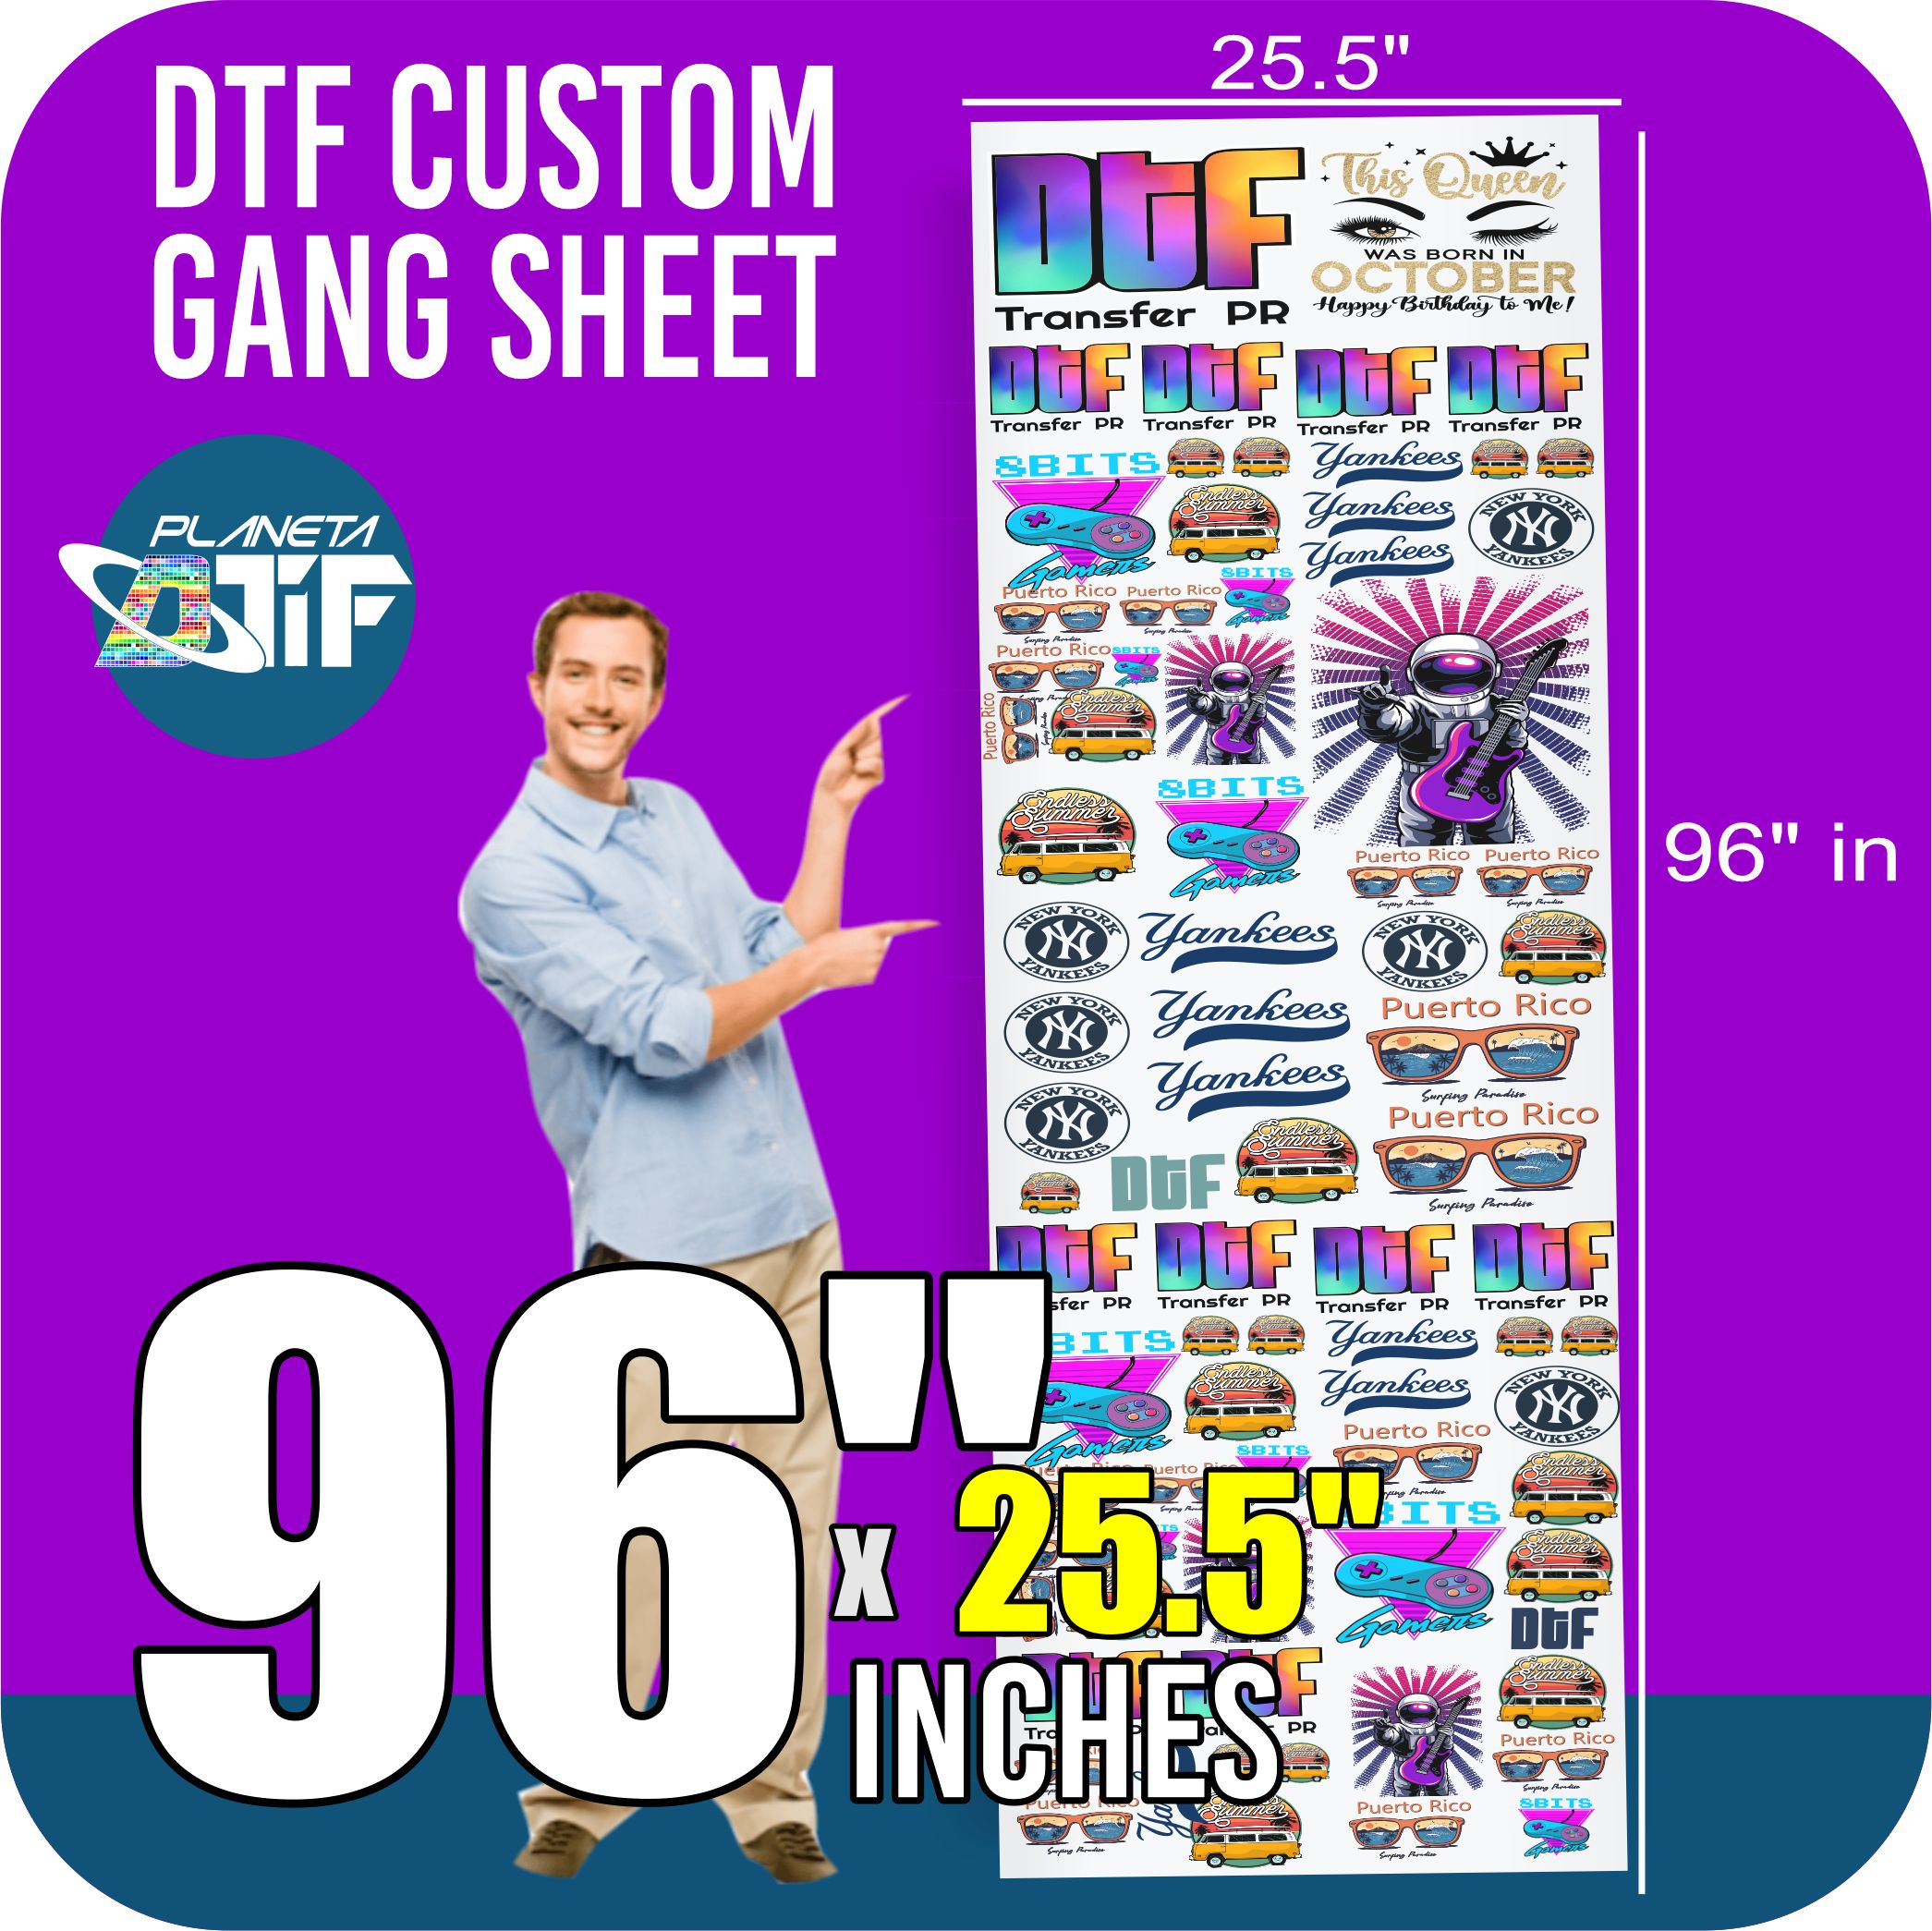 Custom DTF Gang Sheet 25.5 x 96 Inches